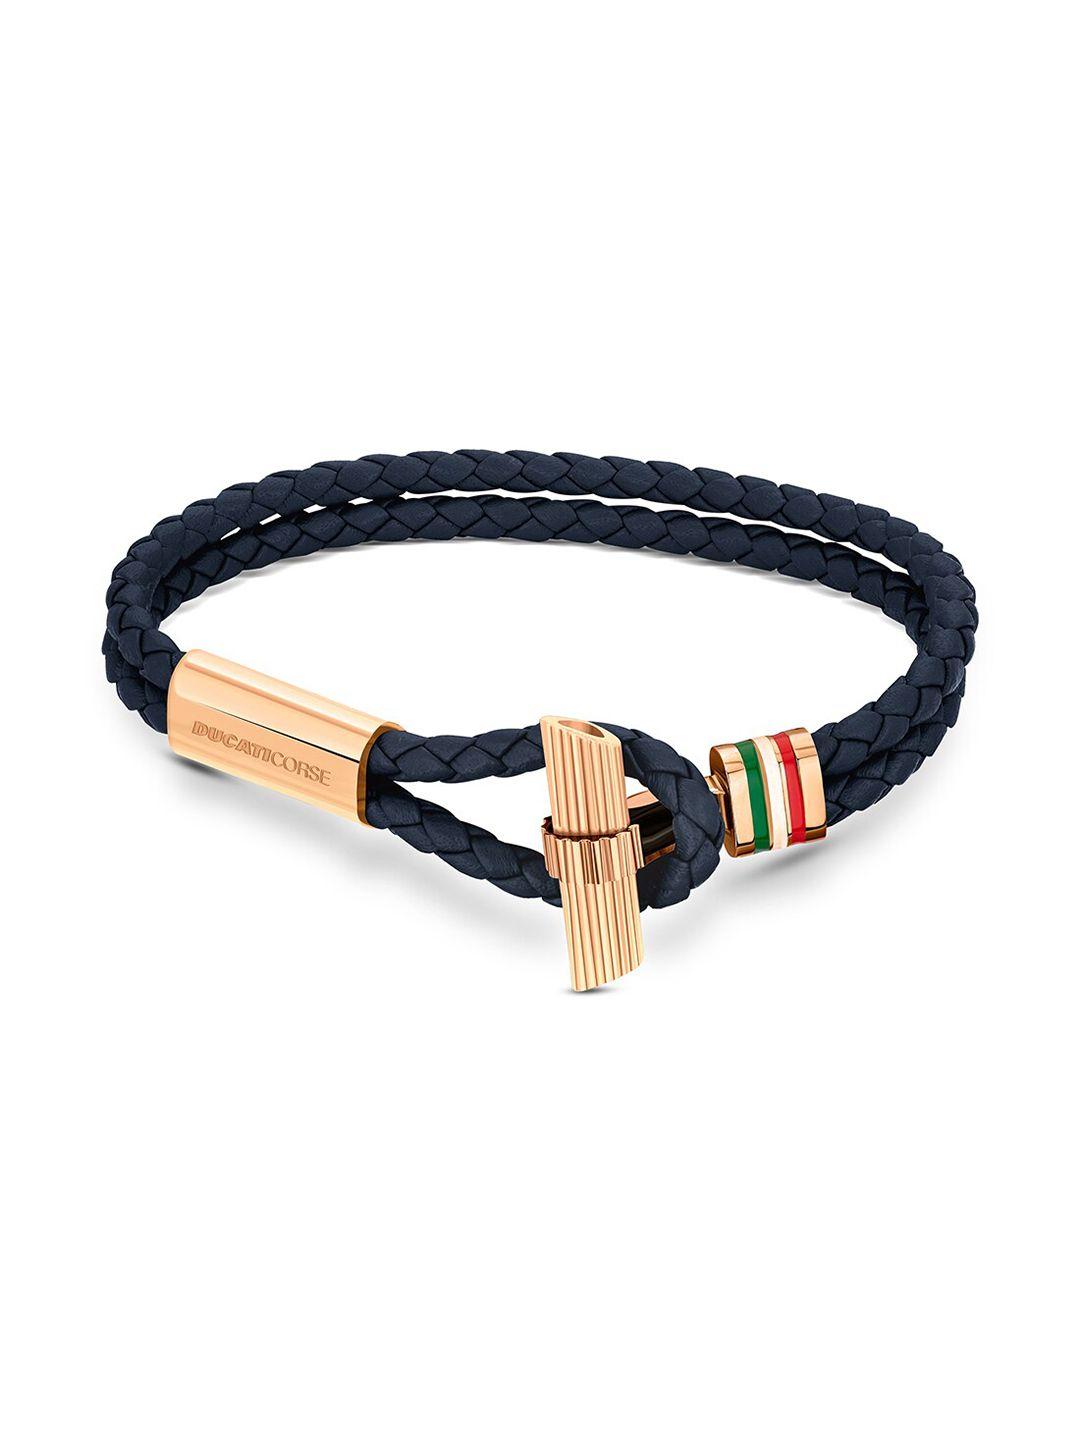 ducati corse men navy blue & gold-toned leather wraparound bracelet